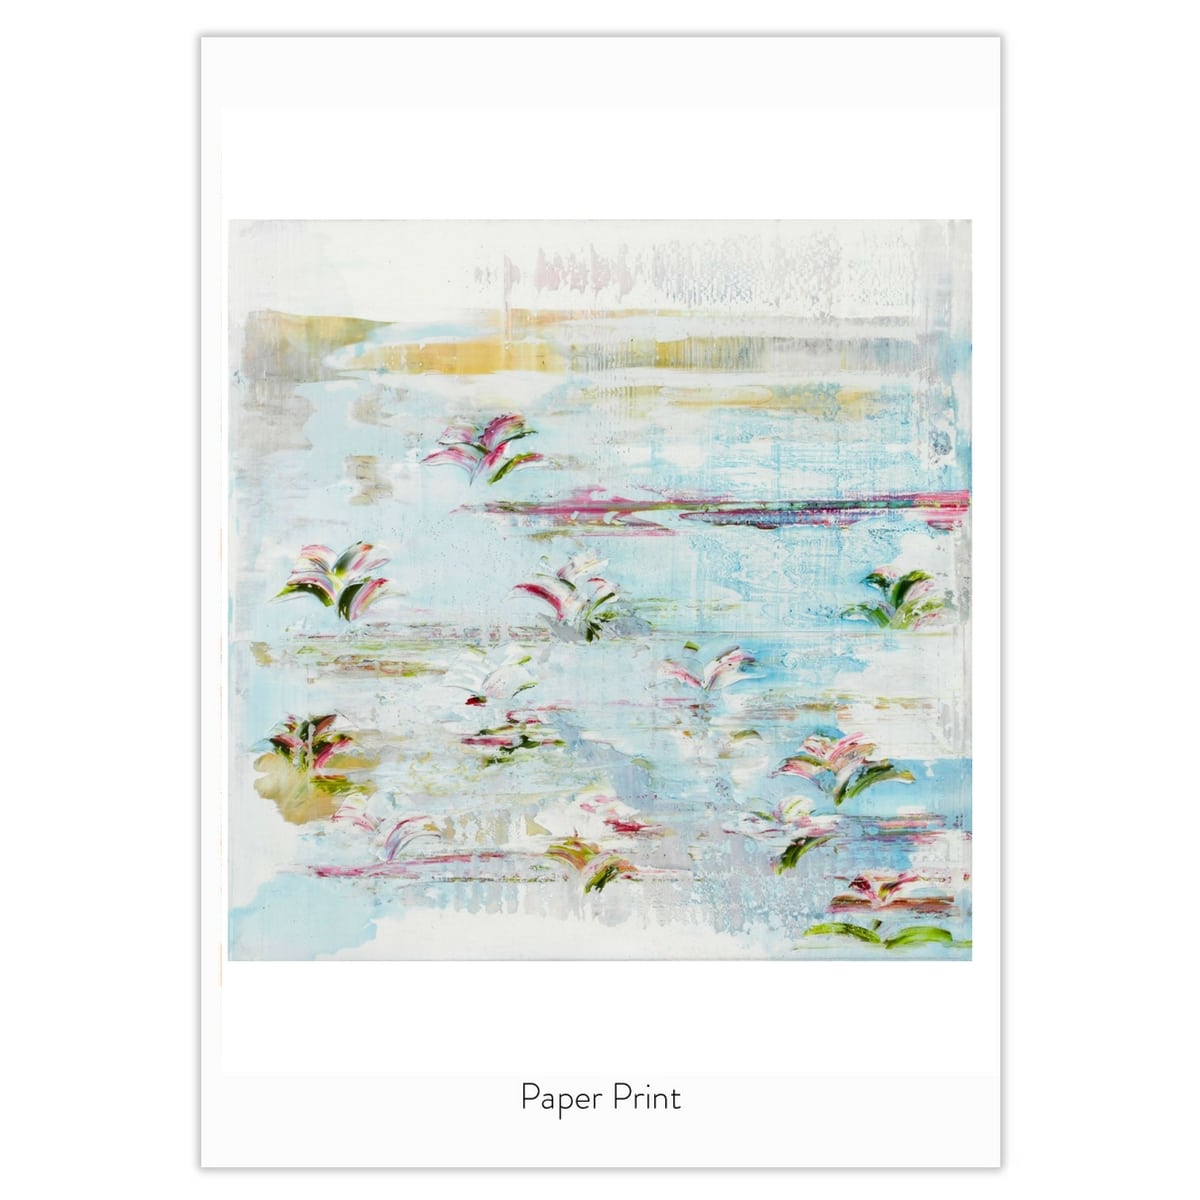 British Artist Jessica Zoob's Fine Art Print Perfect Happiness in Paper Print Format